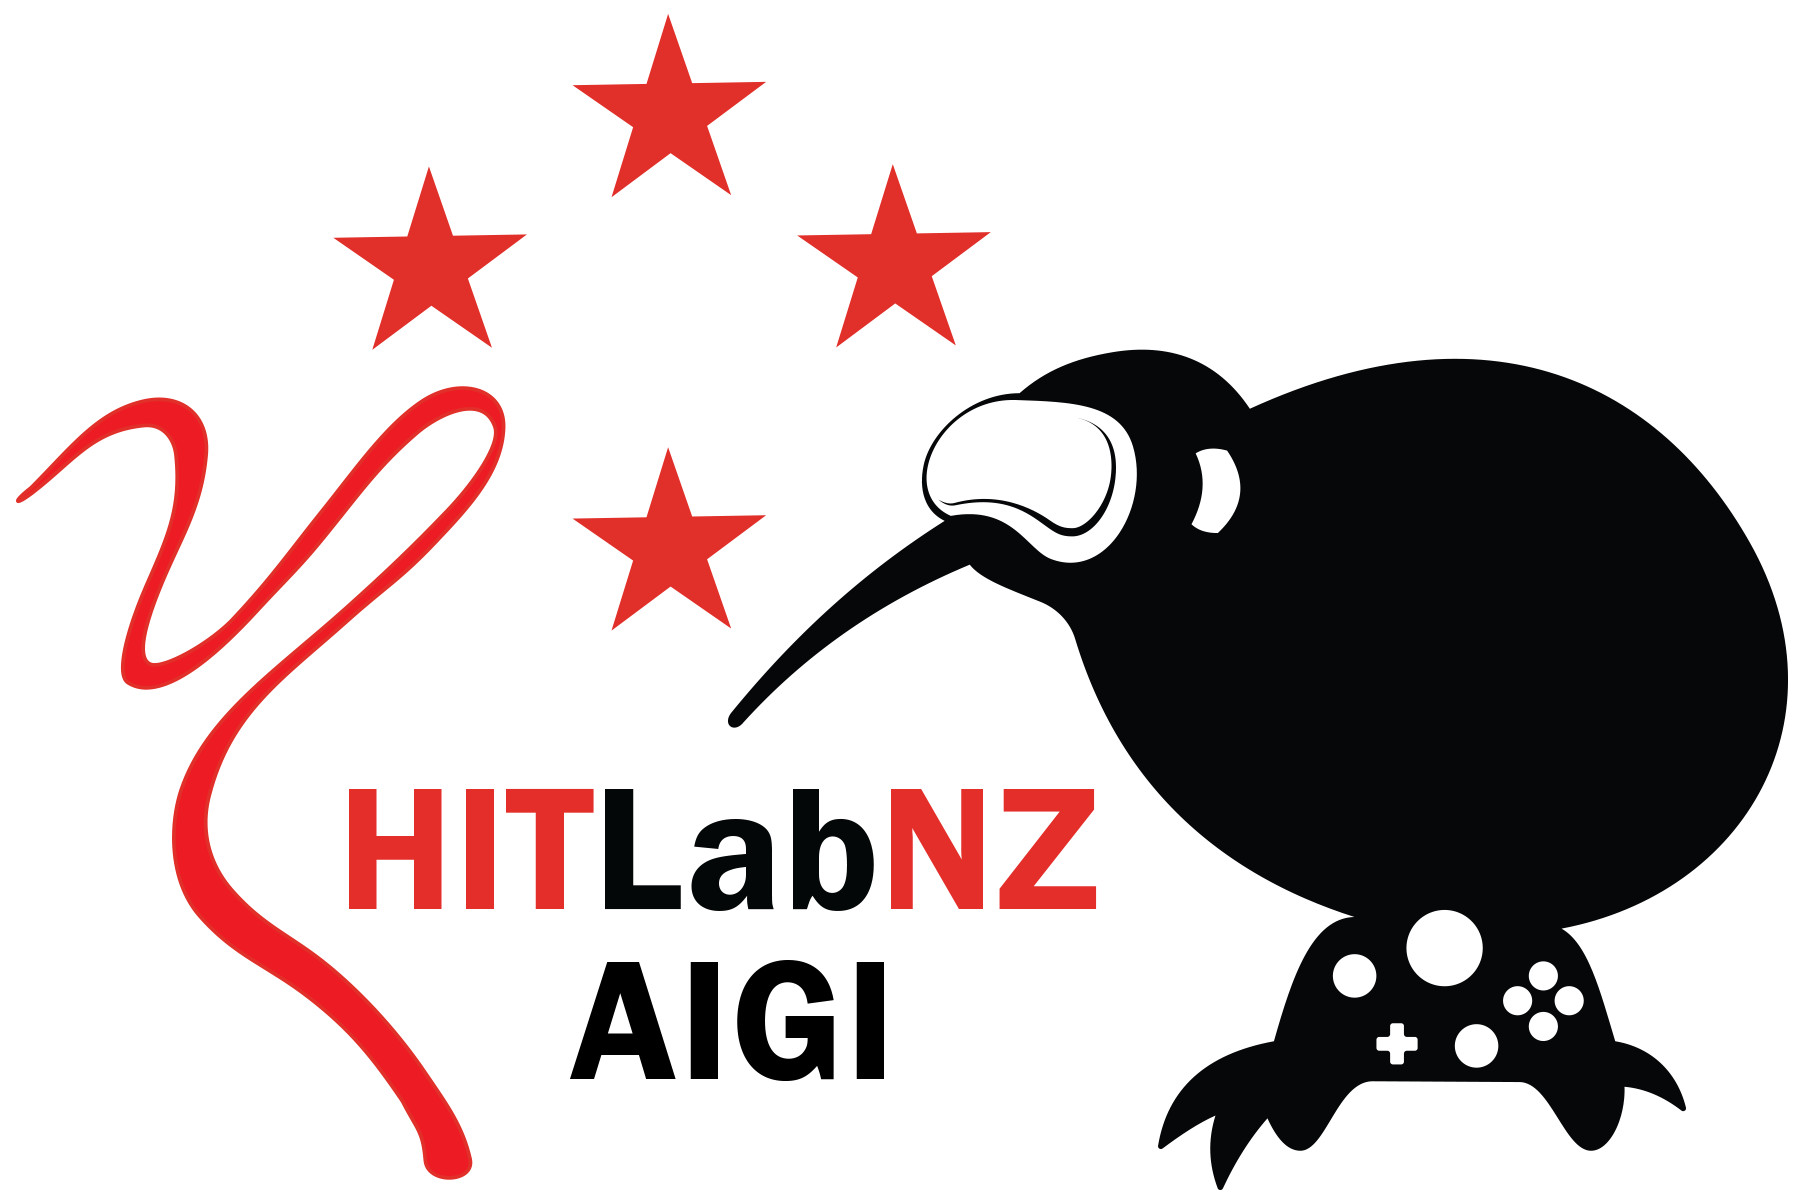 Hitlab logo